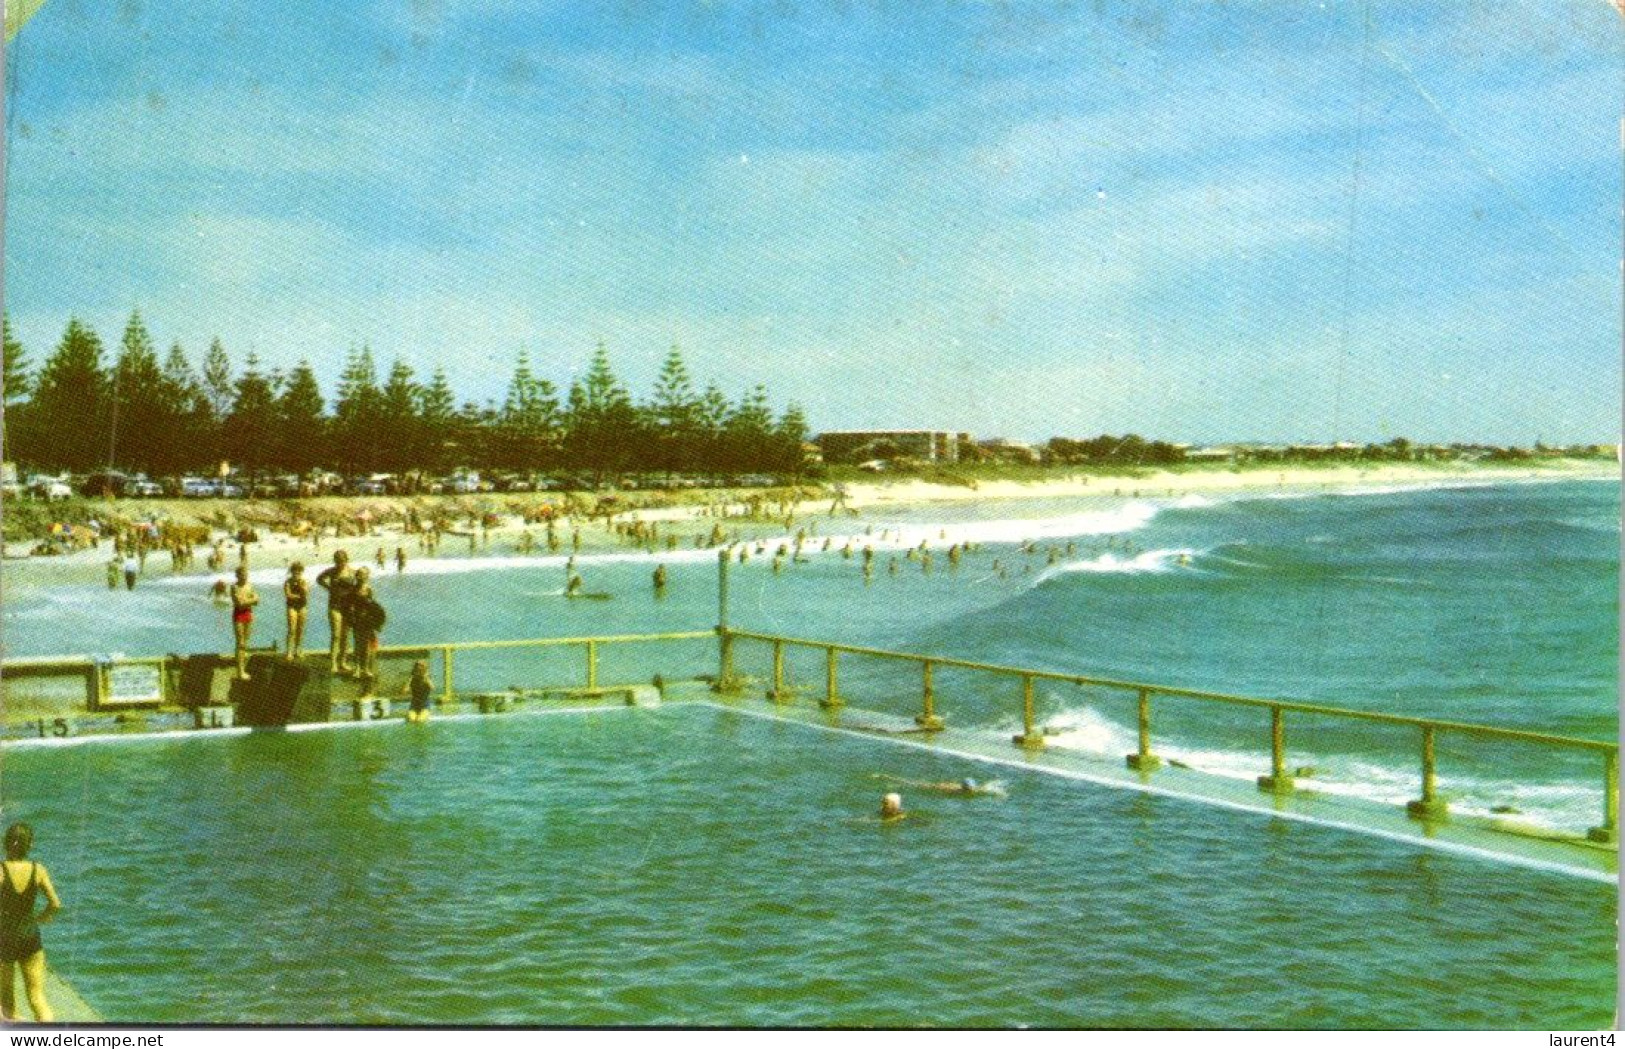 10-12-2023 (1 W 46) Australia - QLD - Burleigh Height Surfing Beach (posted Older Postcard) - Sunshine Coast